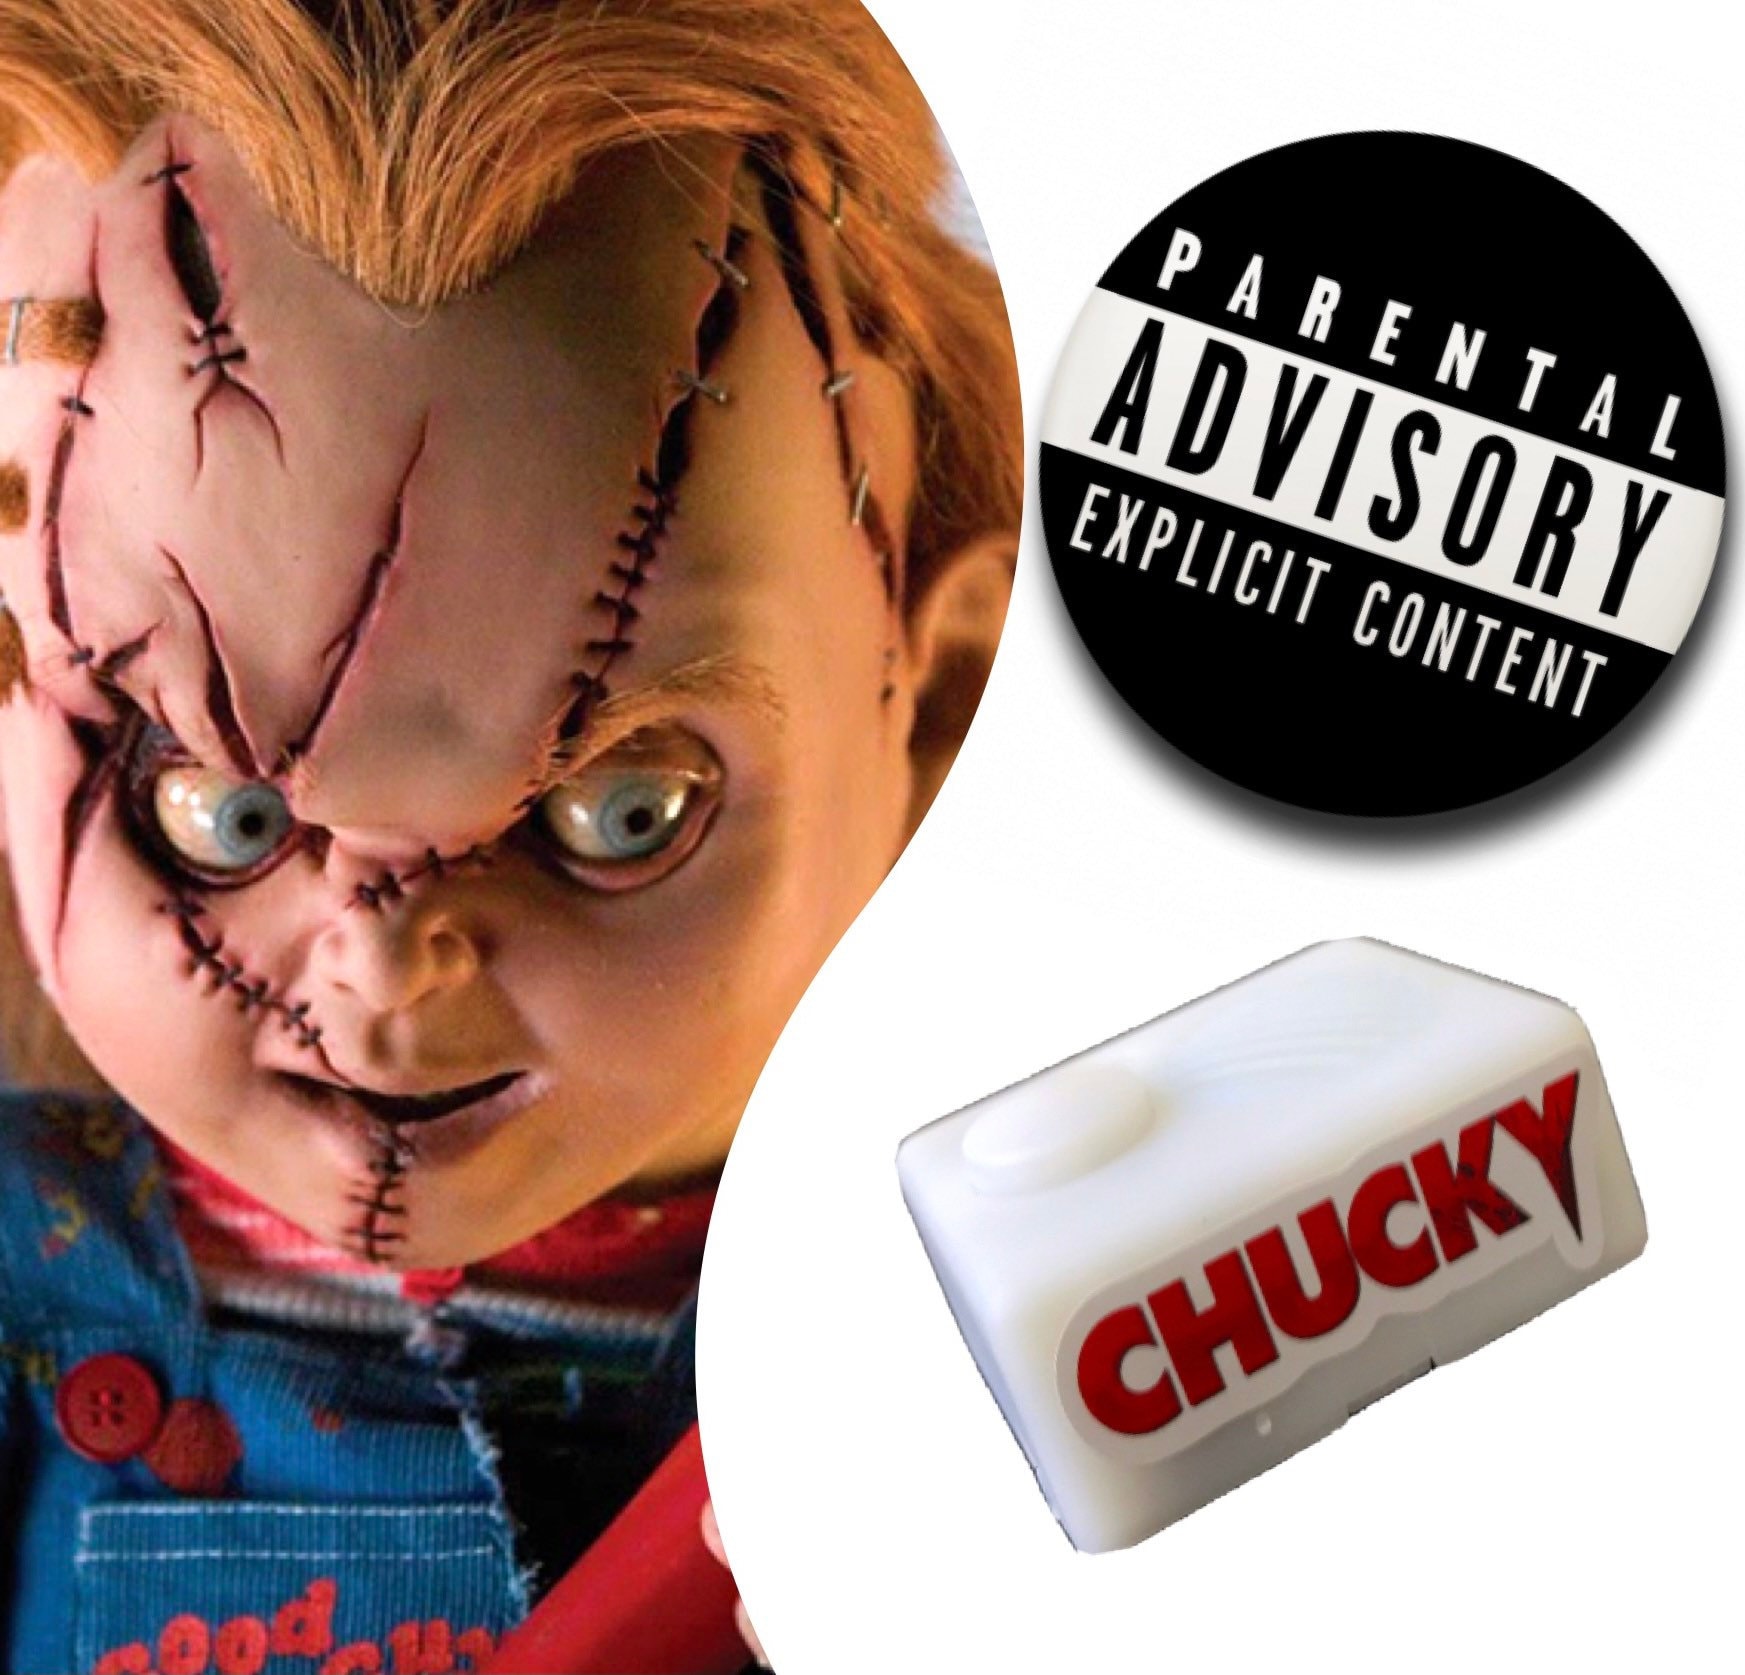 Chucky Good Guy Sound Box